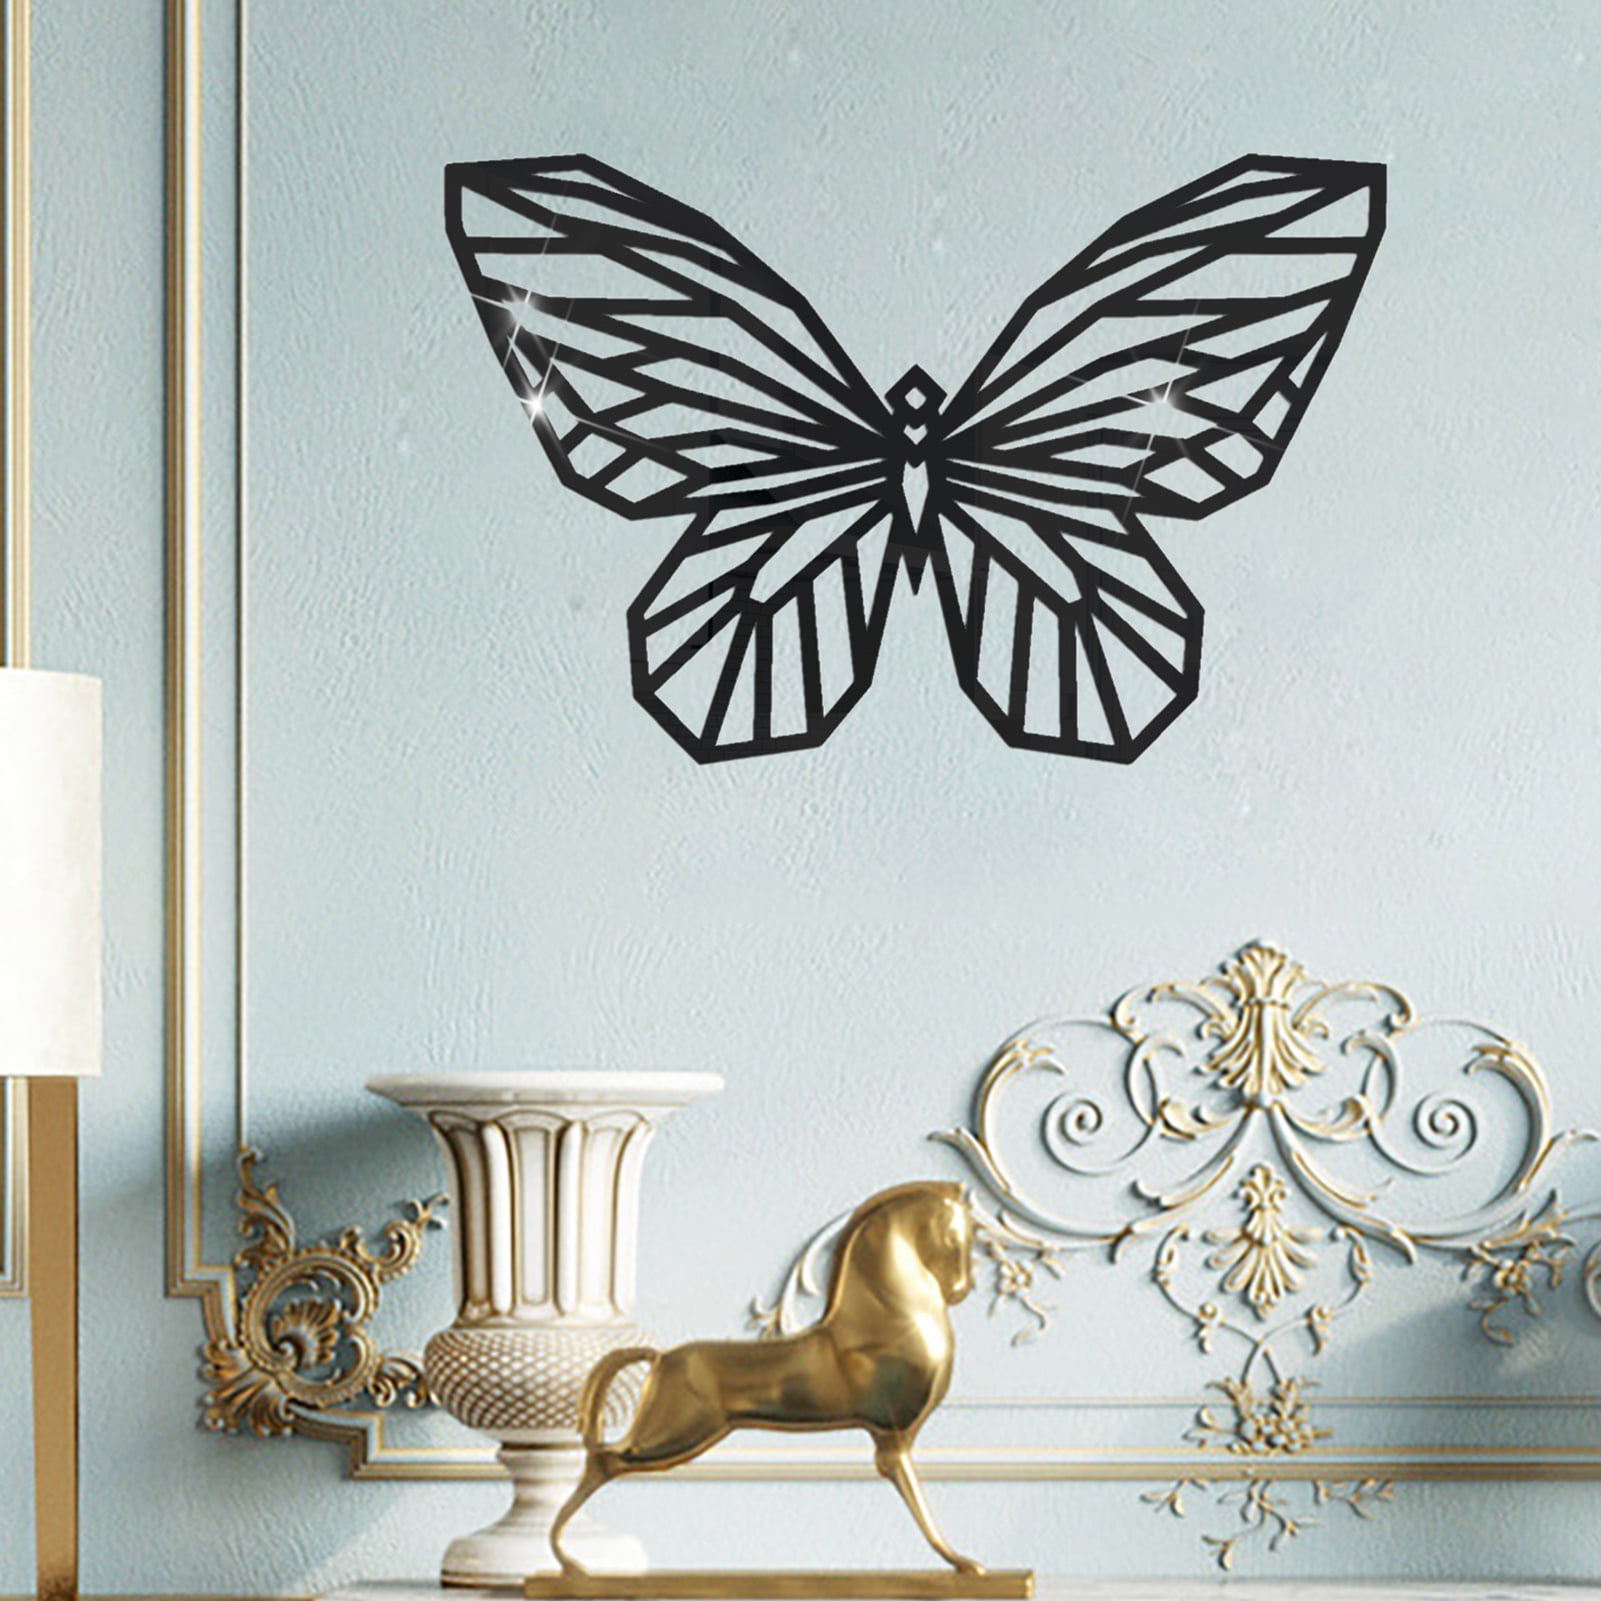 RoomMates 3D Gold Butterflies Peel & Stick Mirrors